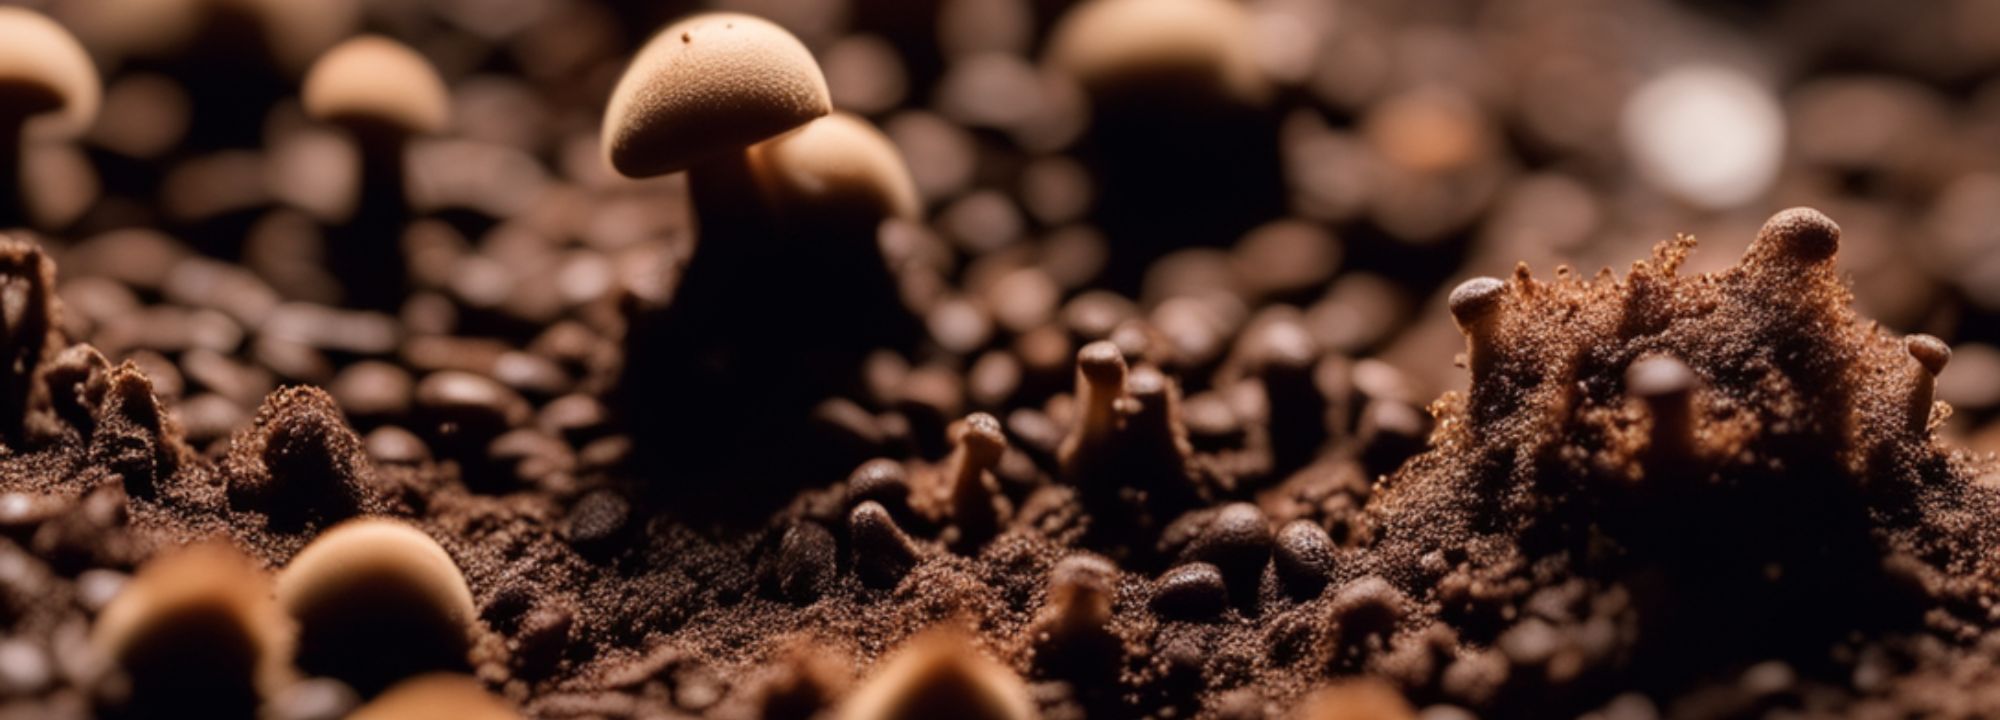 grow mushrooms in coffee grounds